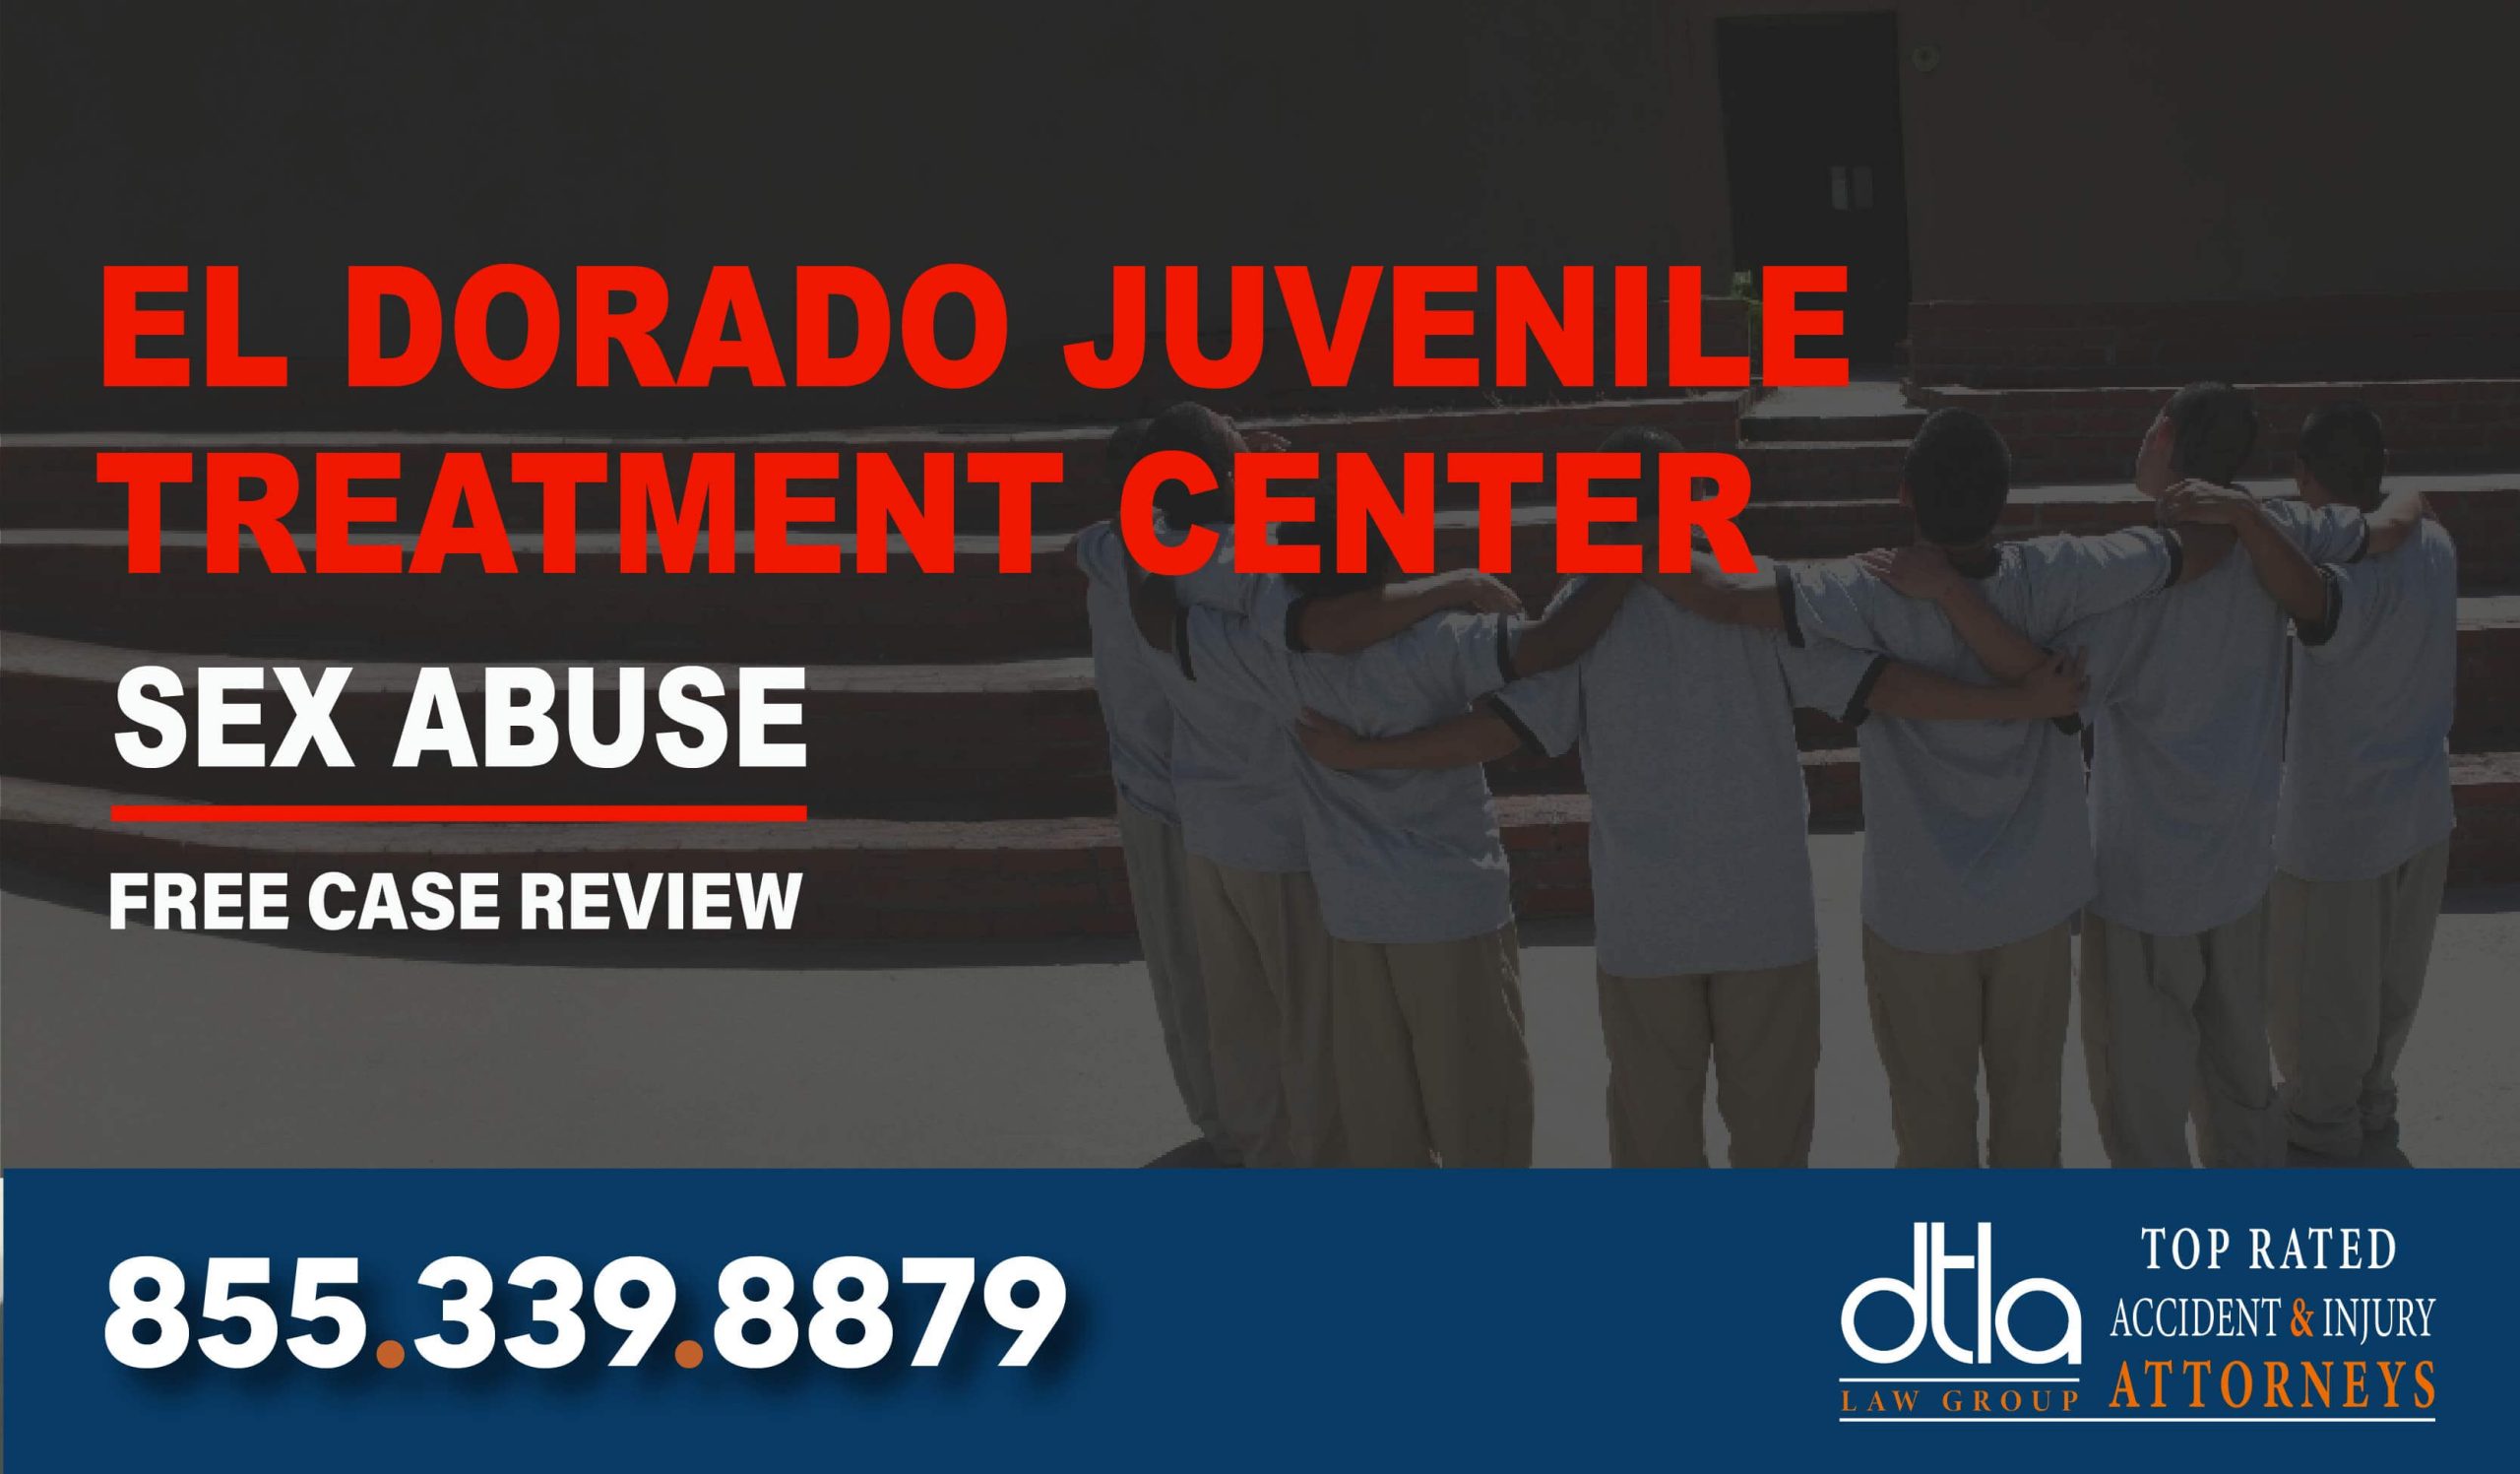 El Dorado Juvenile Treatment Center Sexual Abuse Lawyer attorney sue compensation incident liability